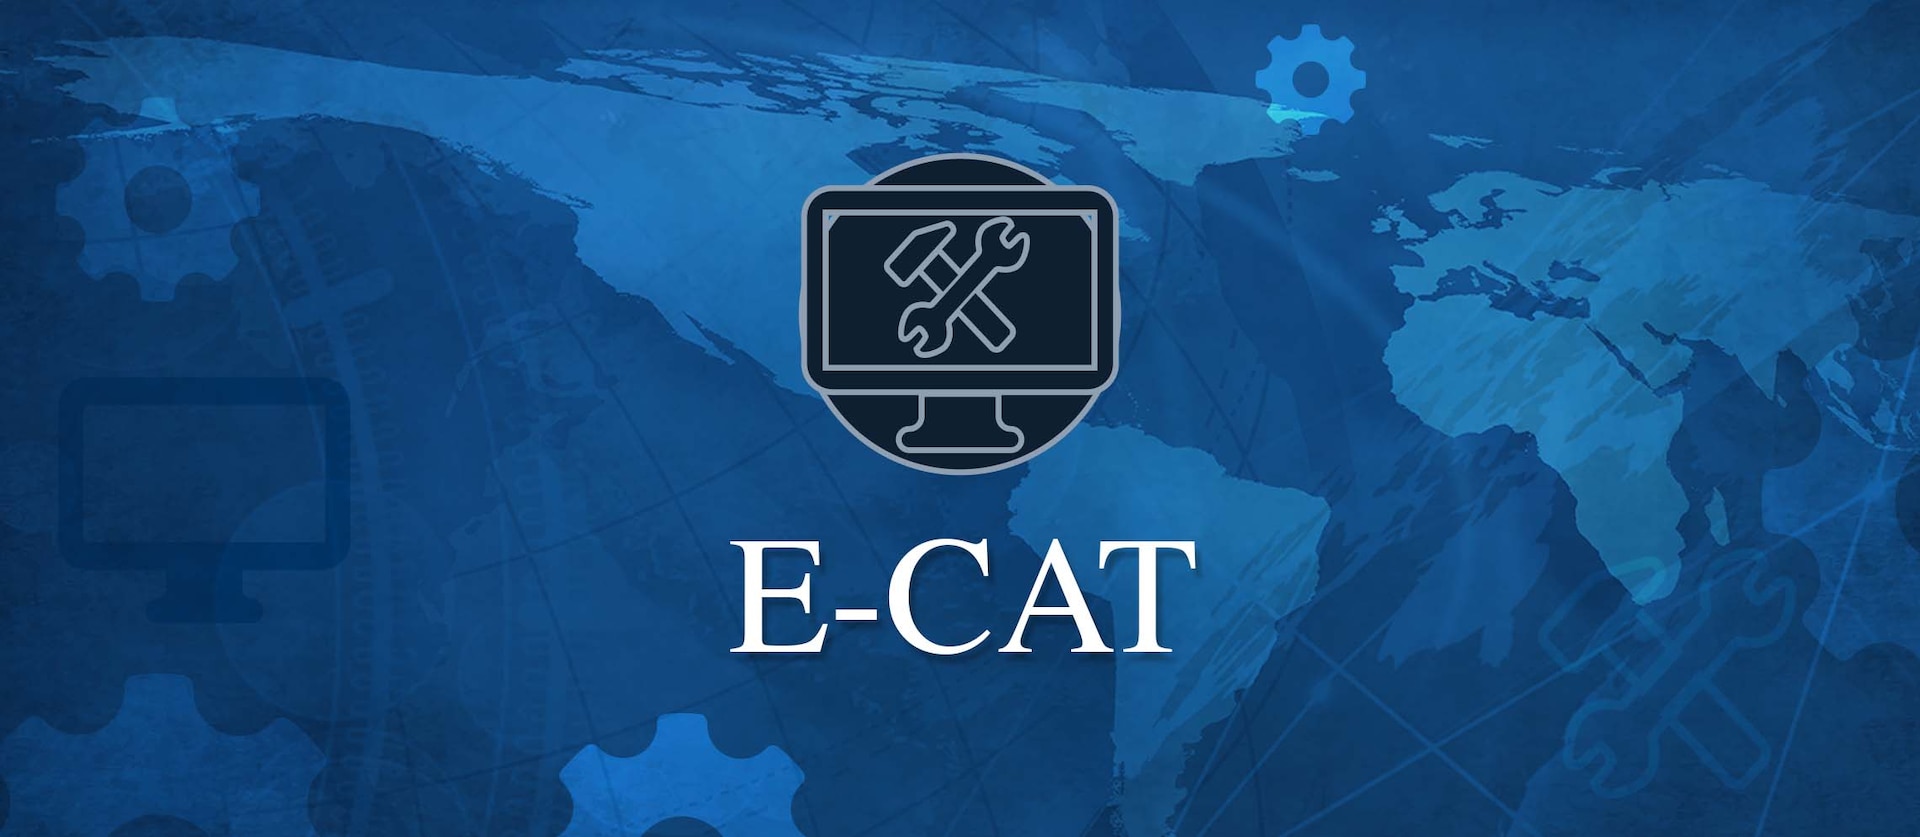 E-CAT - Electronic Cataloging > Defense Logistics Agency > E-Cat ...